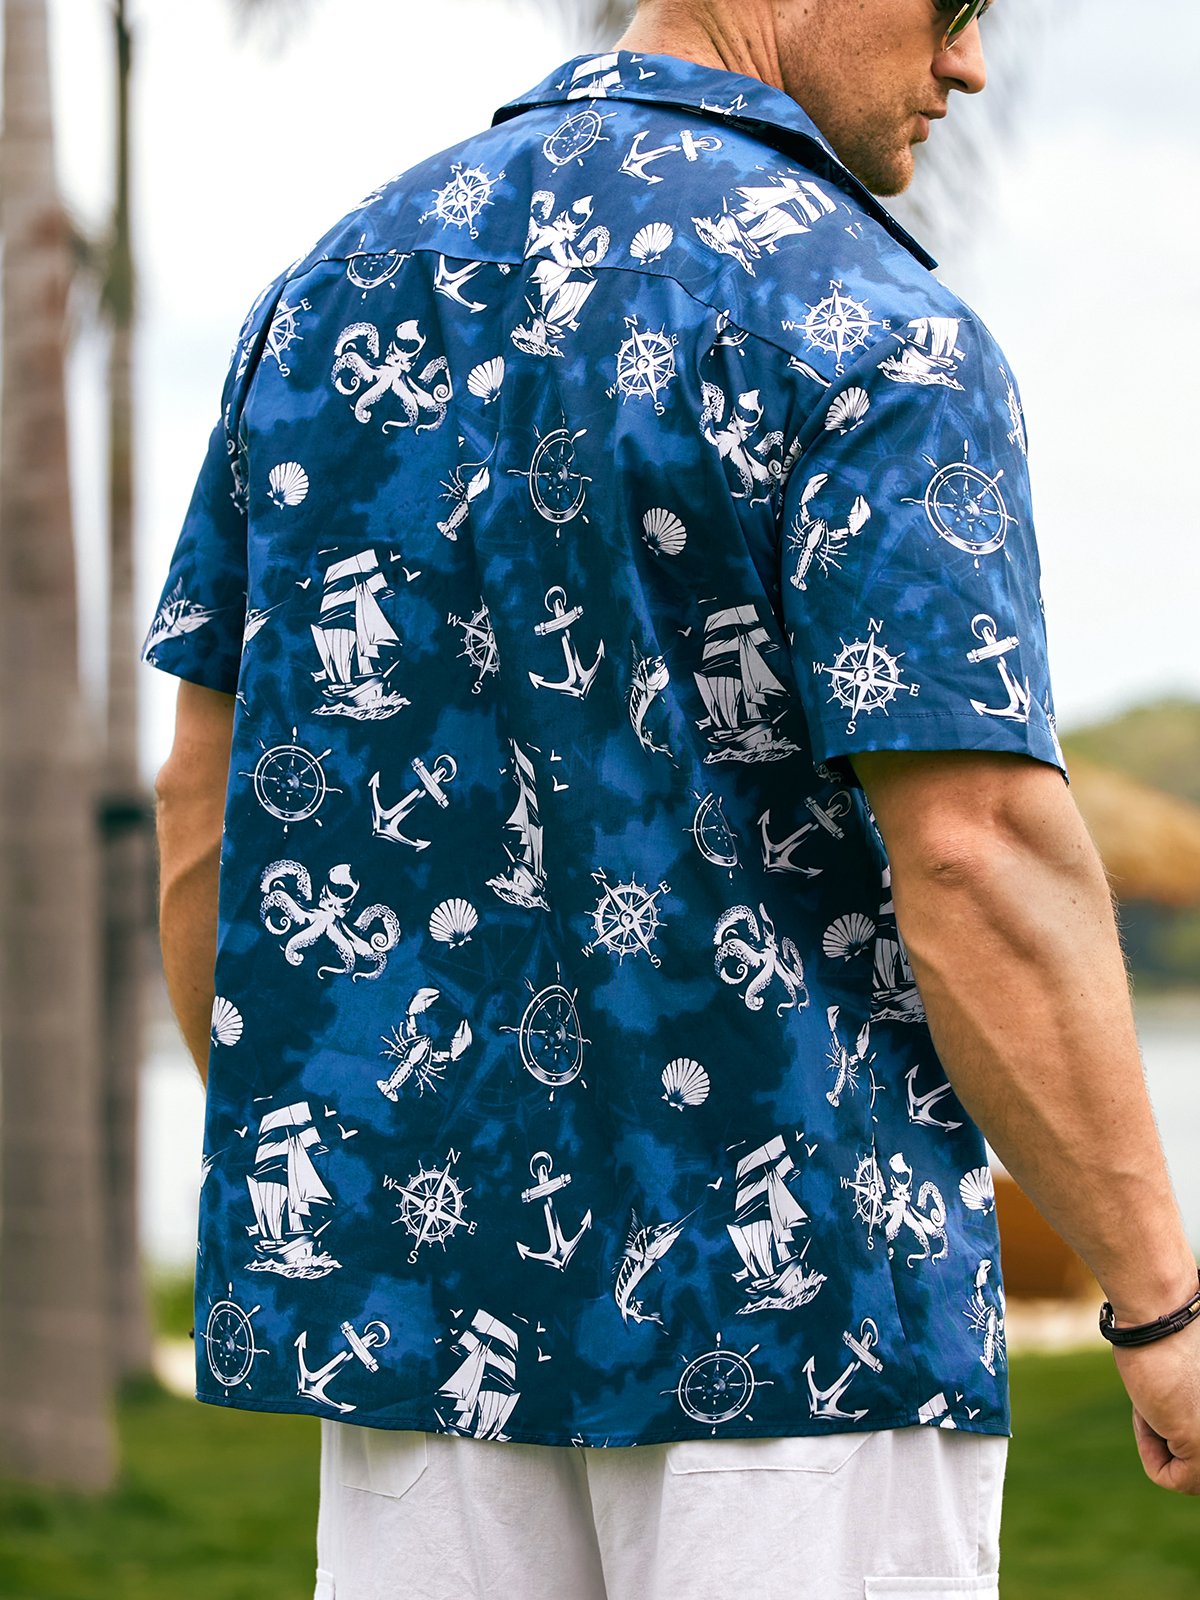 Hardaddy® Cotton Nautical Elements Aloha Shirt